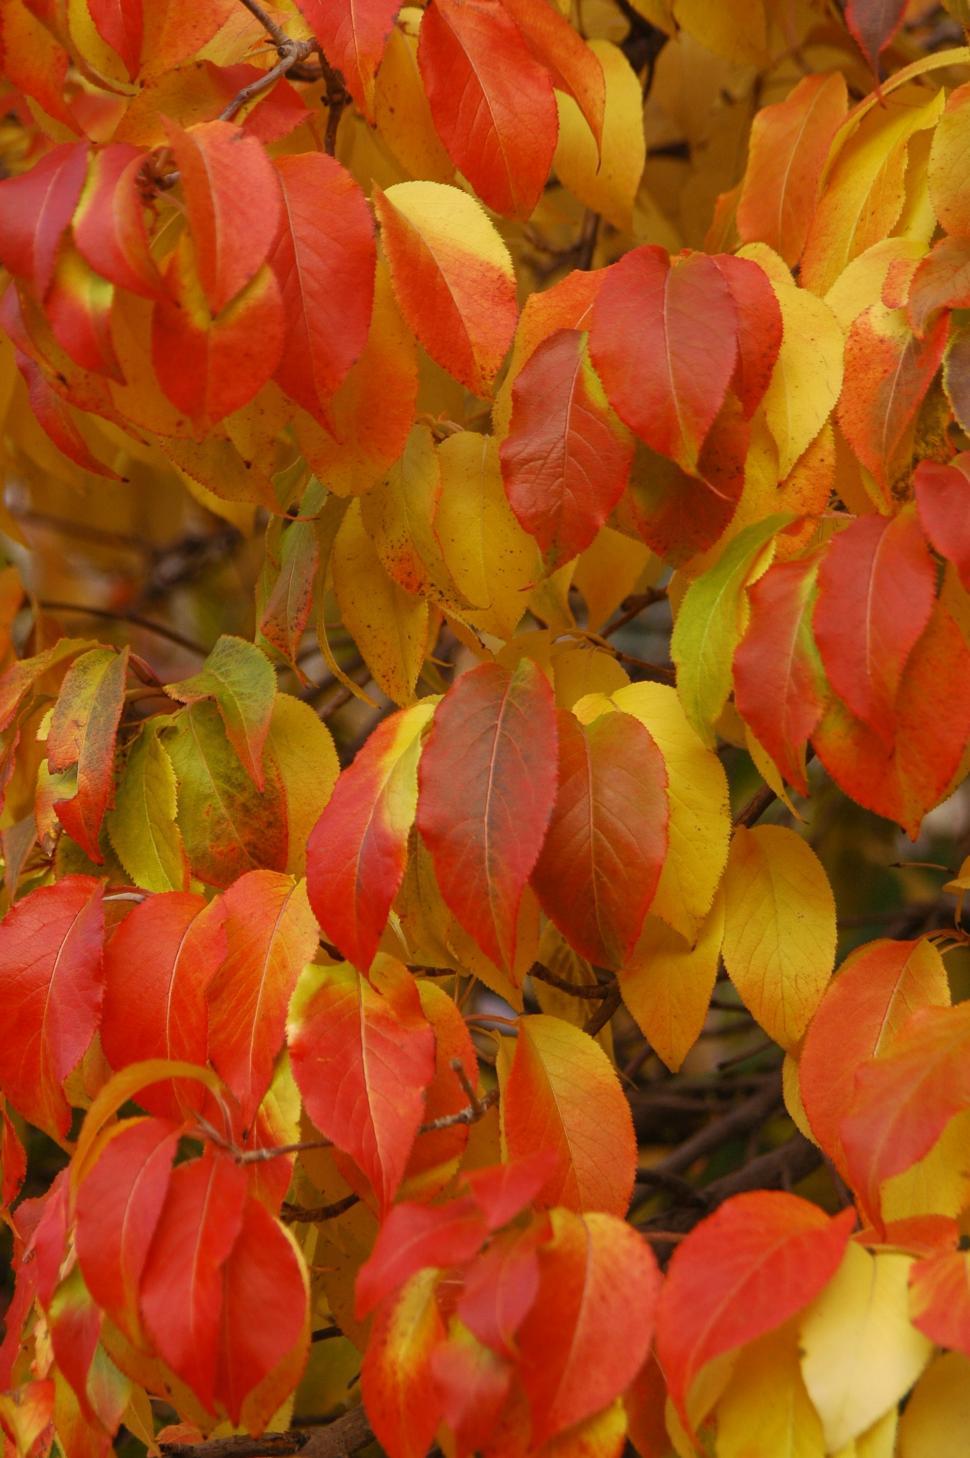 Free Image of Fall Foilage - Autumn Leaves 